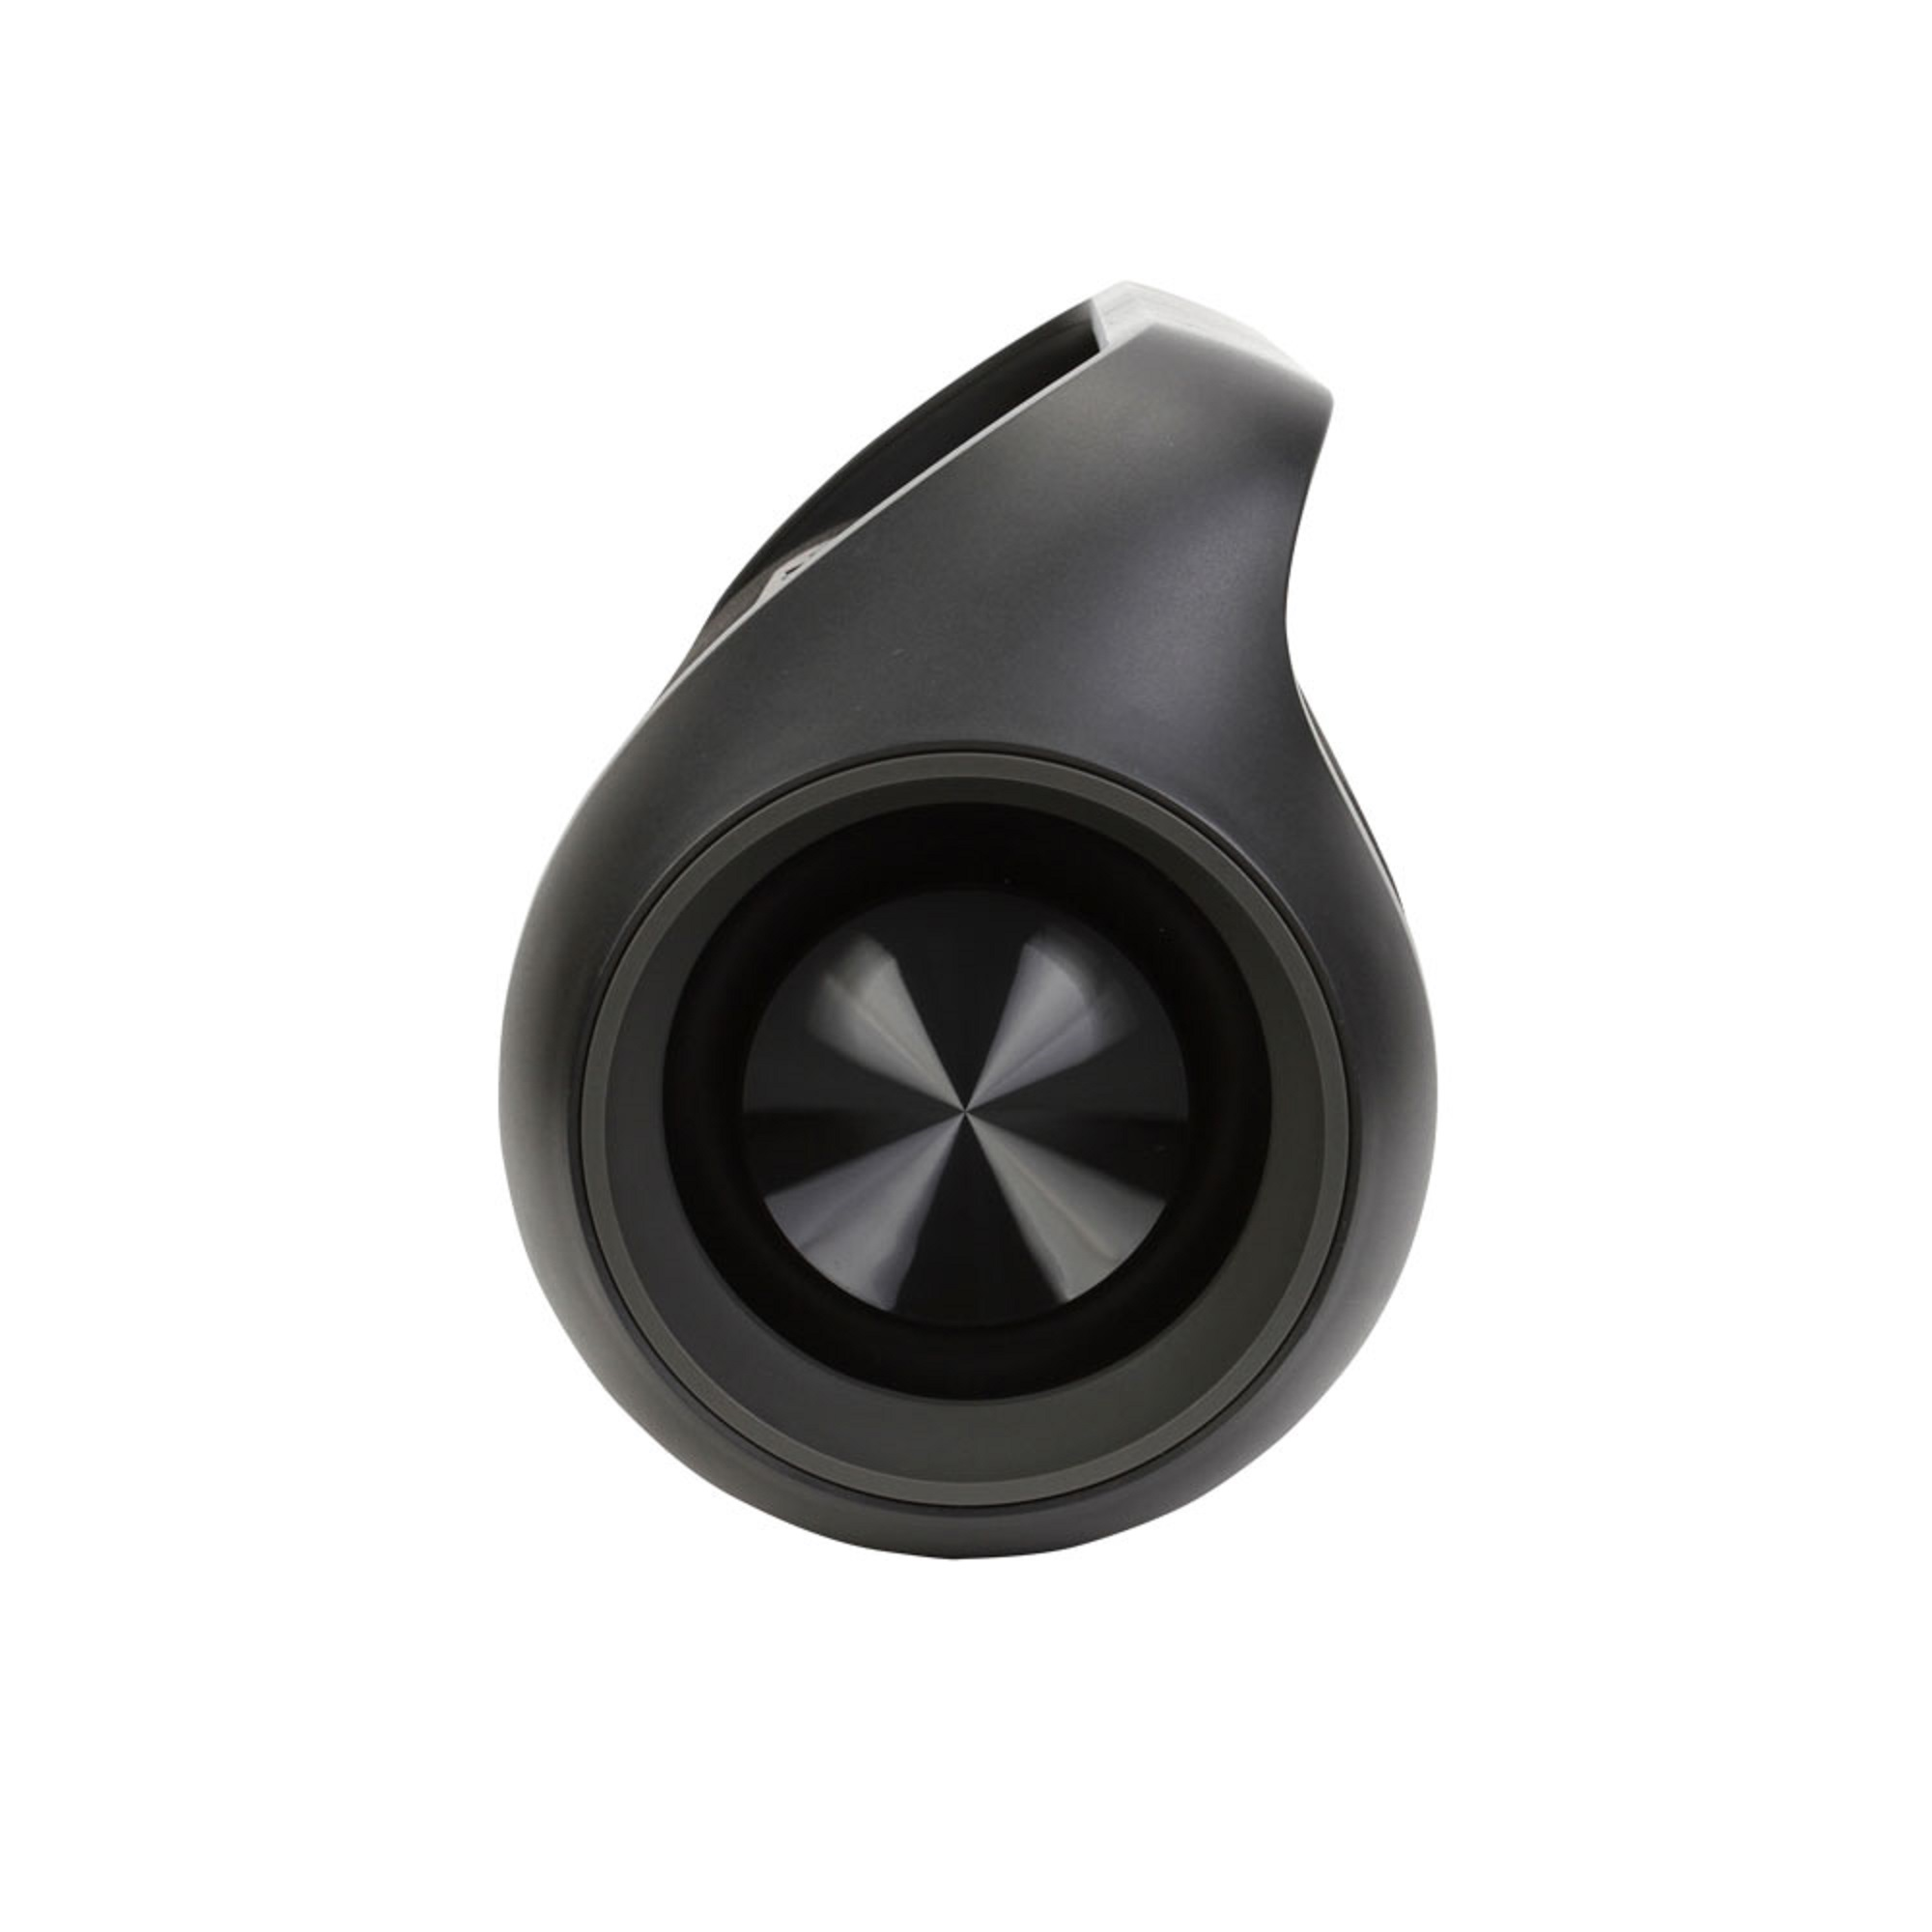 Bluetooth-Karaoke-Lautsprecher, BS-260 VIVAX schwarz